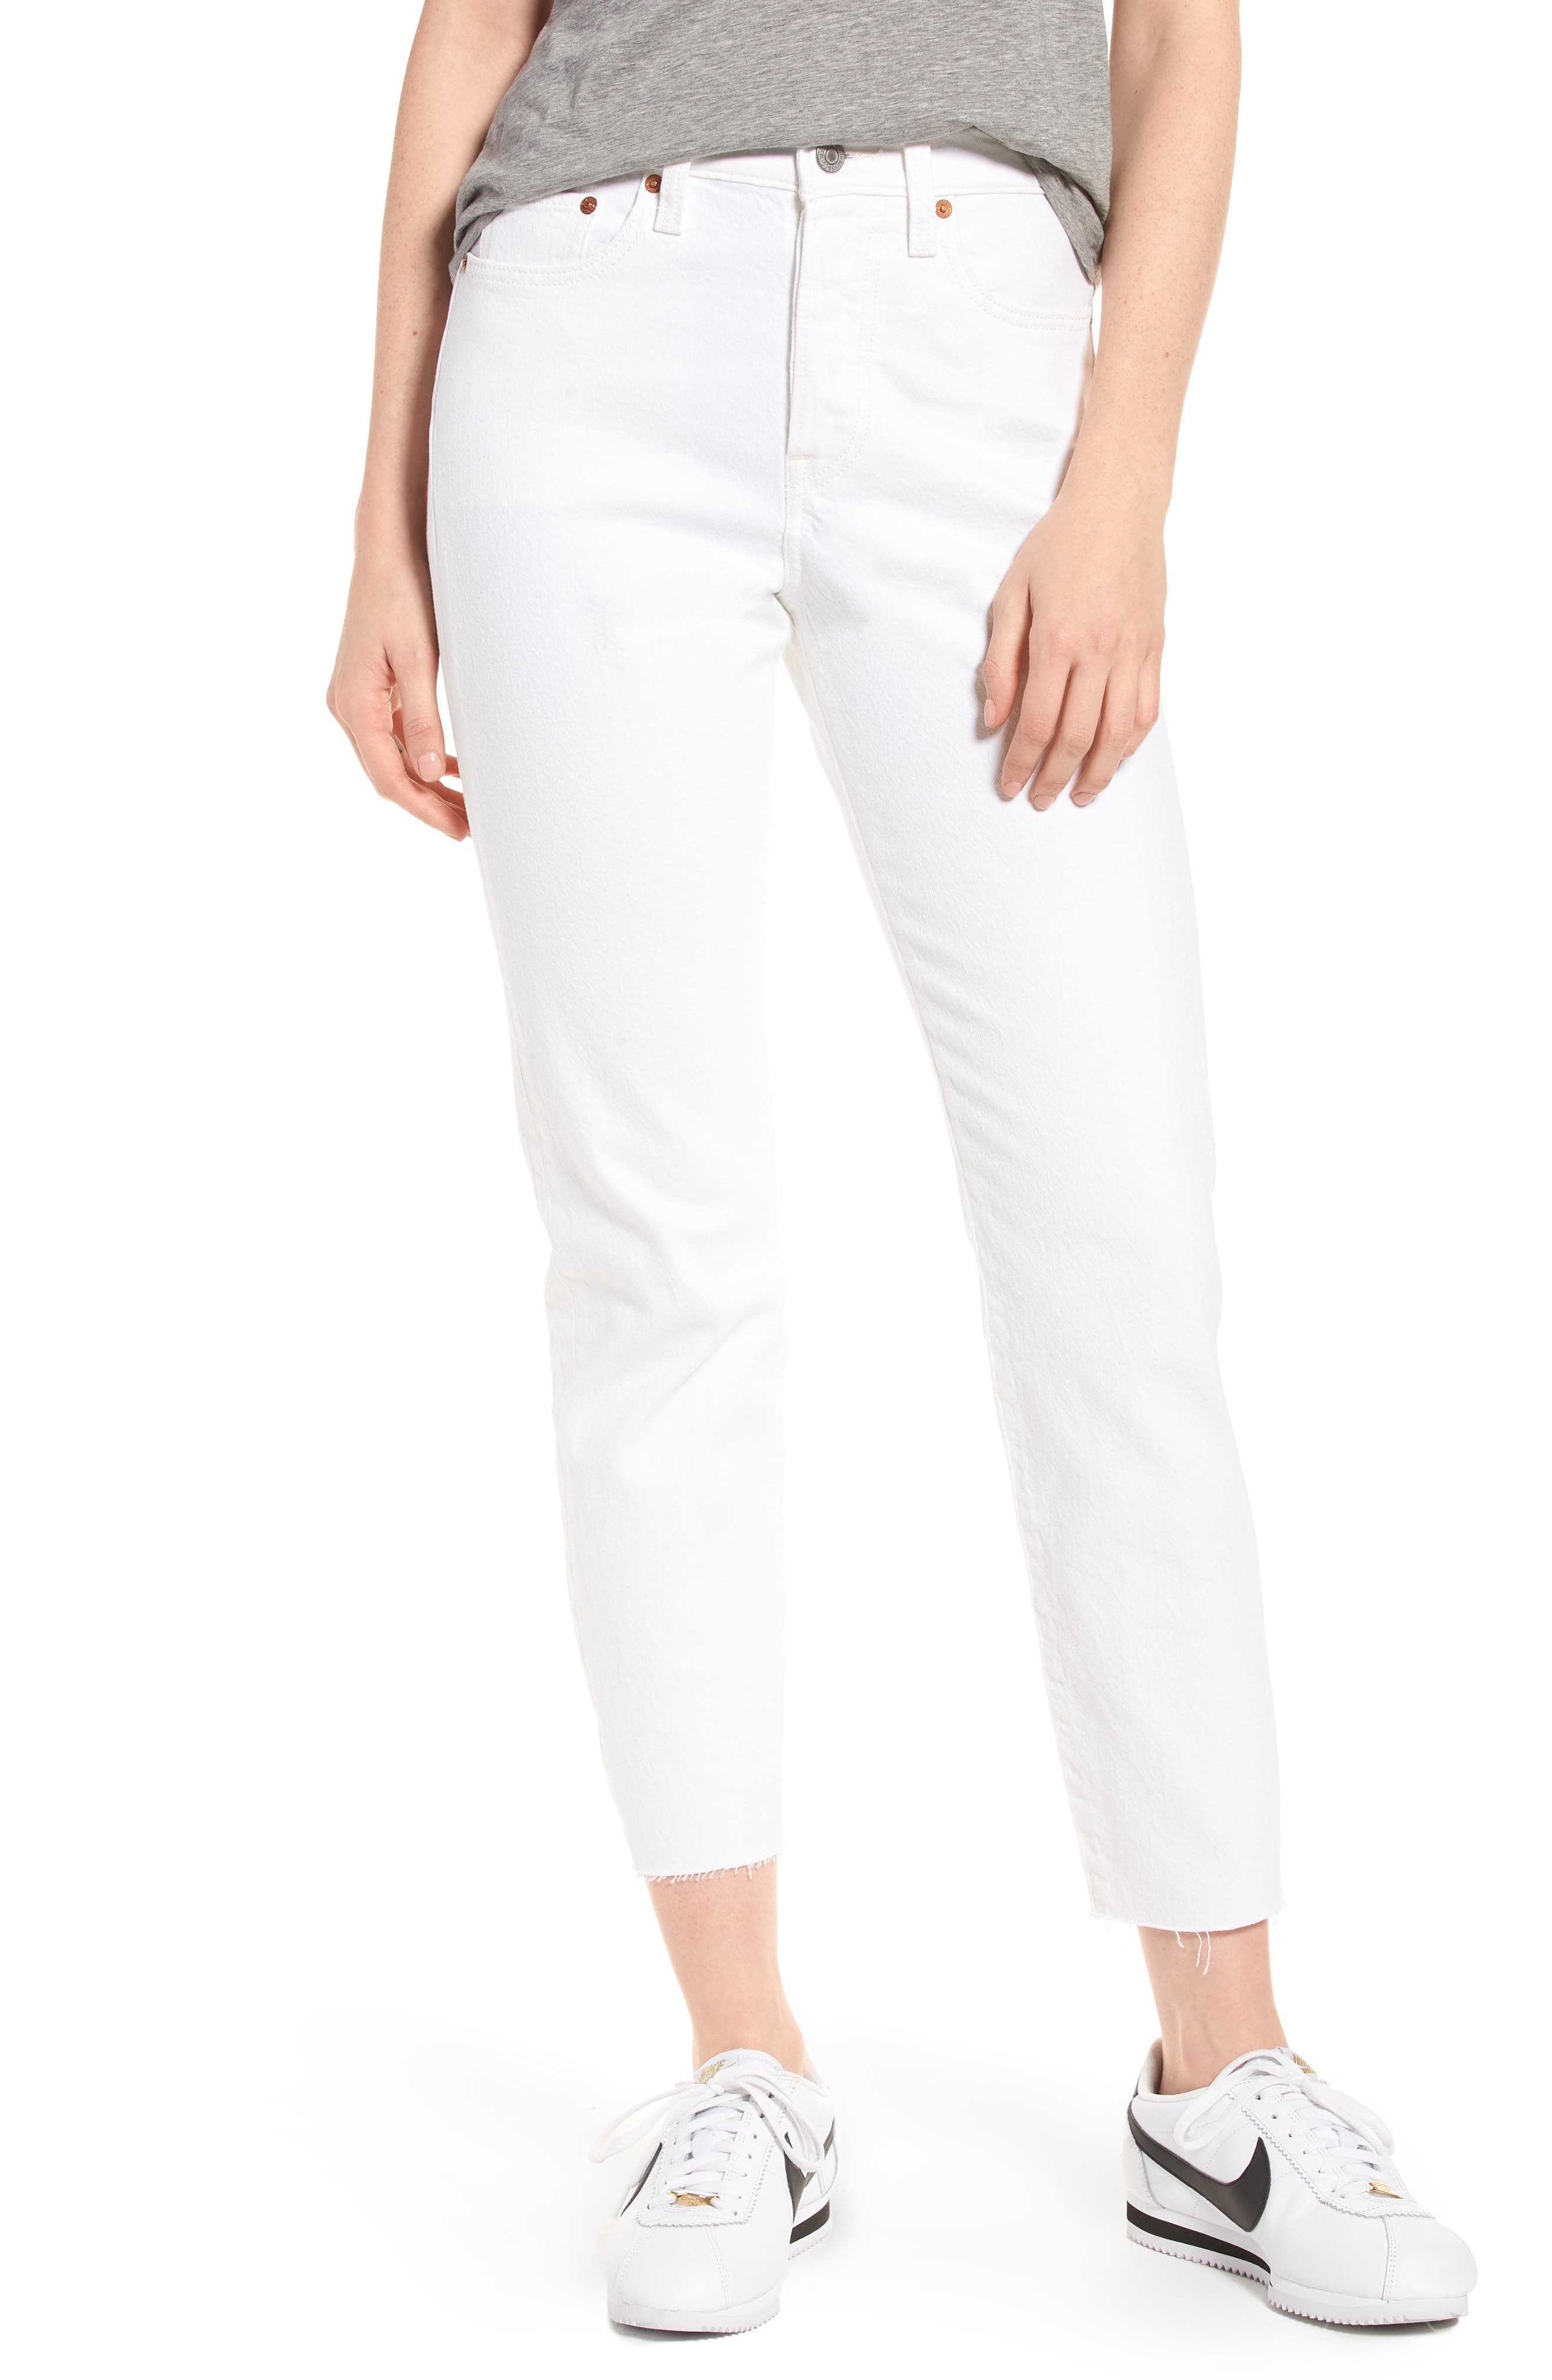 levi's white stretch jeans